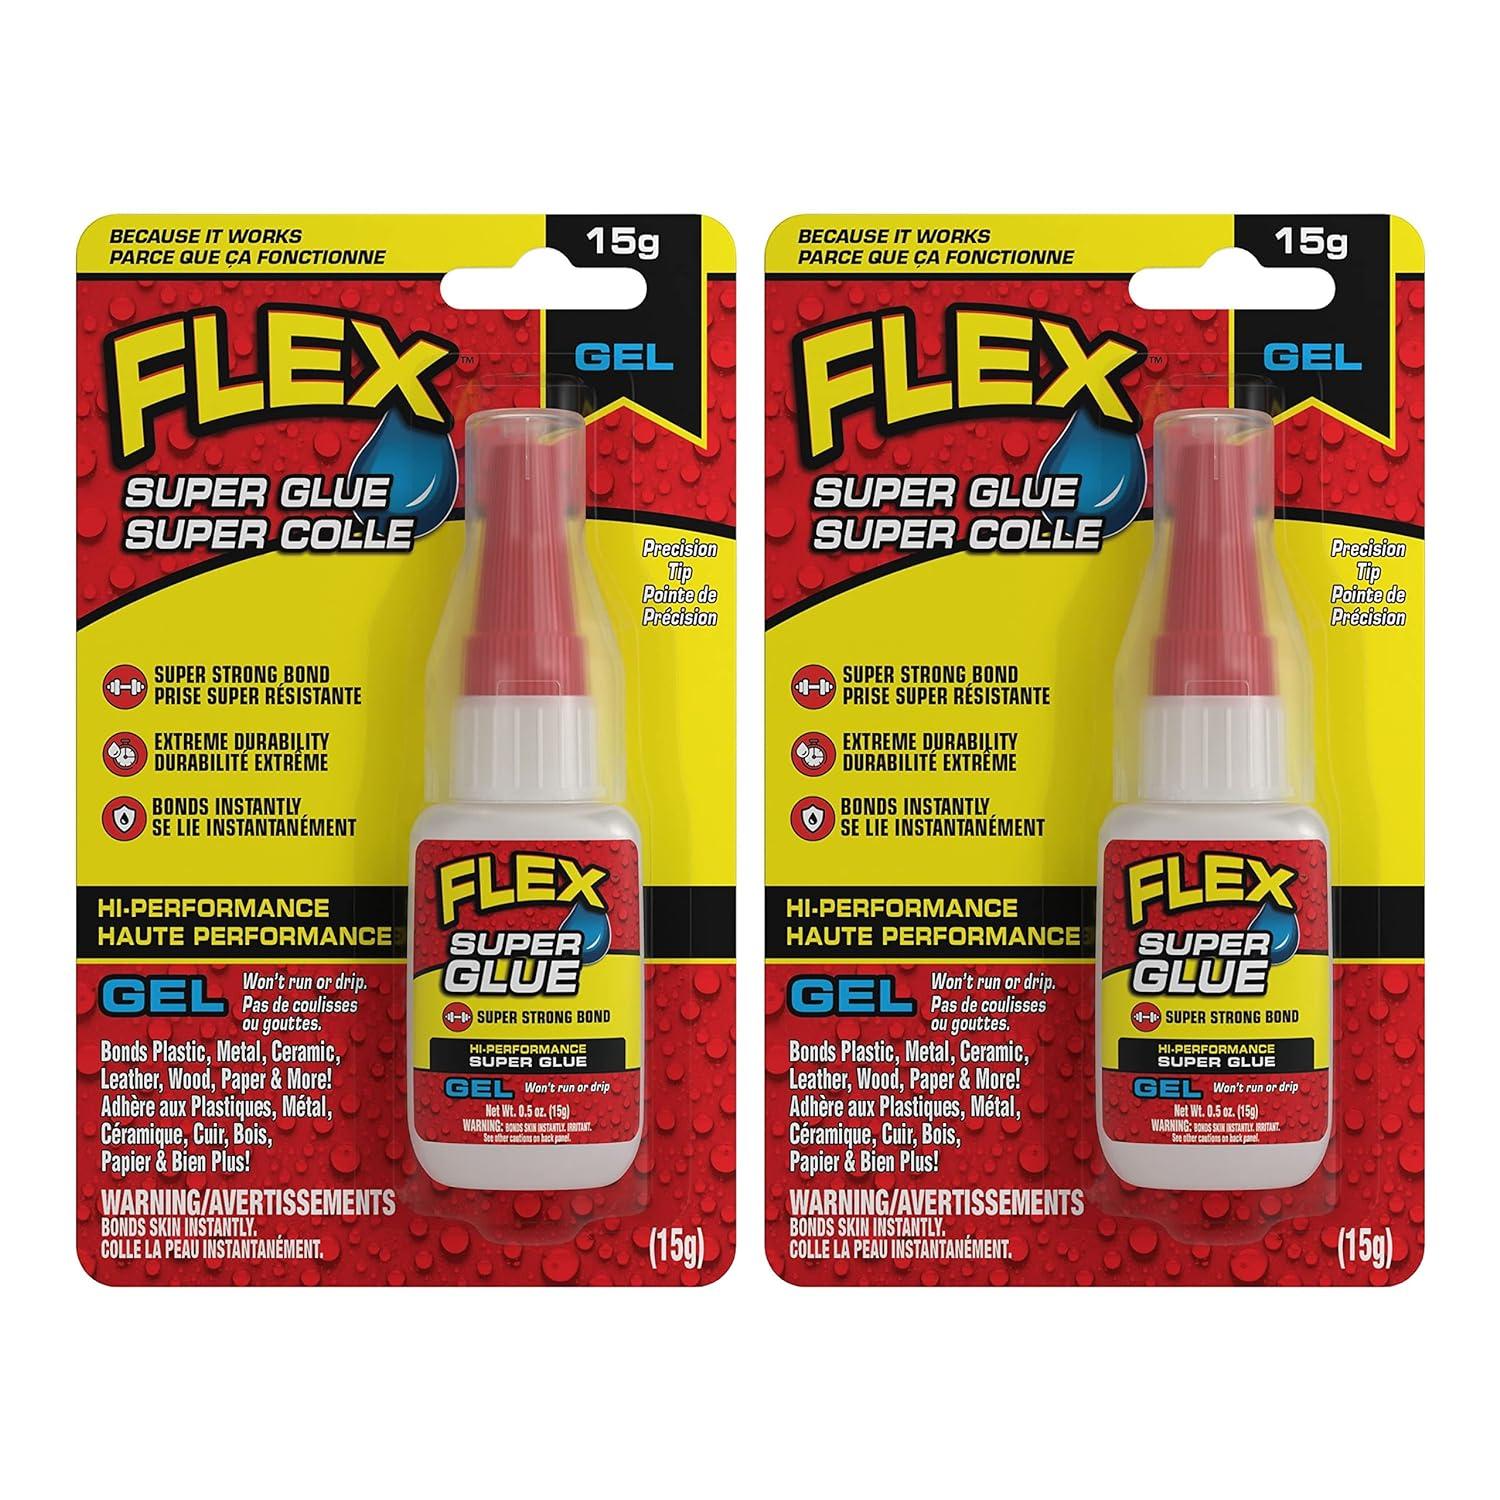 flex super glue gel ca cyanoacrylate adhesive high-performance durable instant bond  flex super b0bvy8lh8v